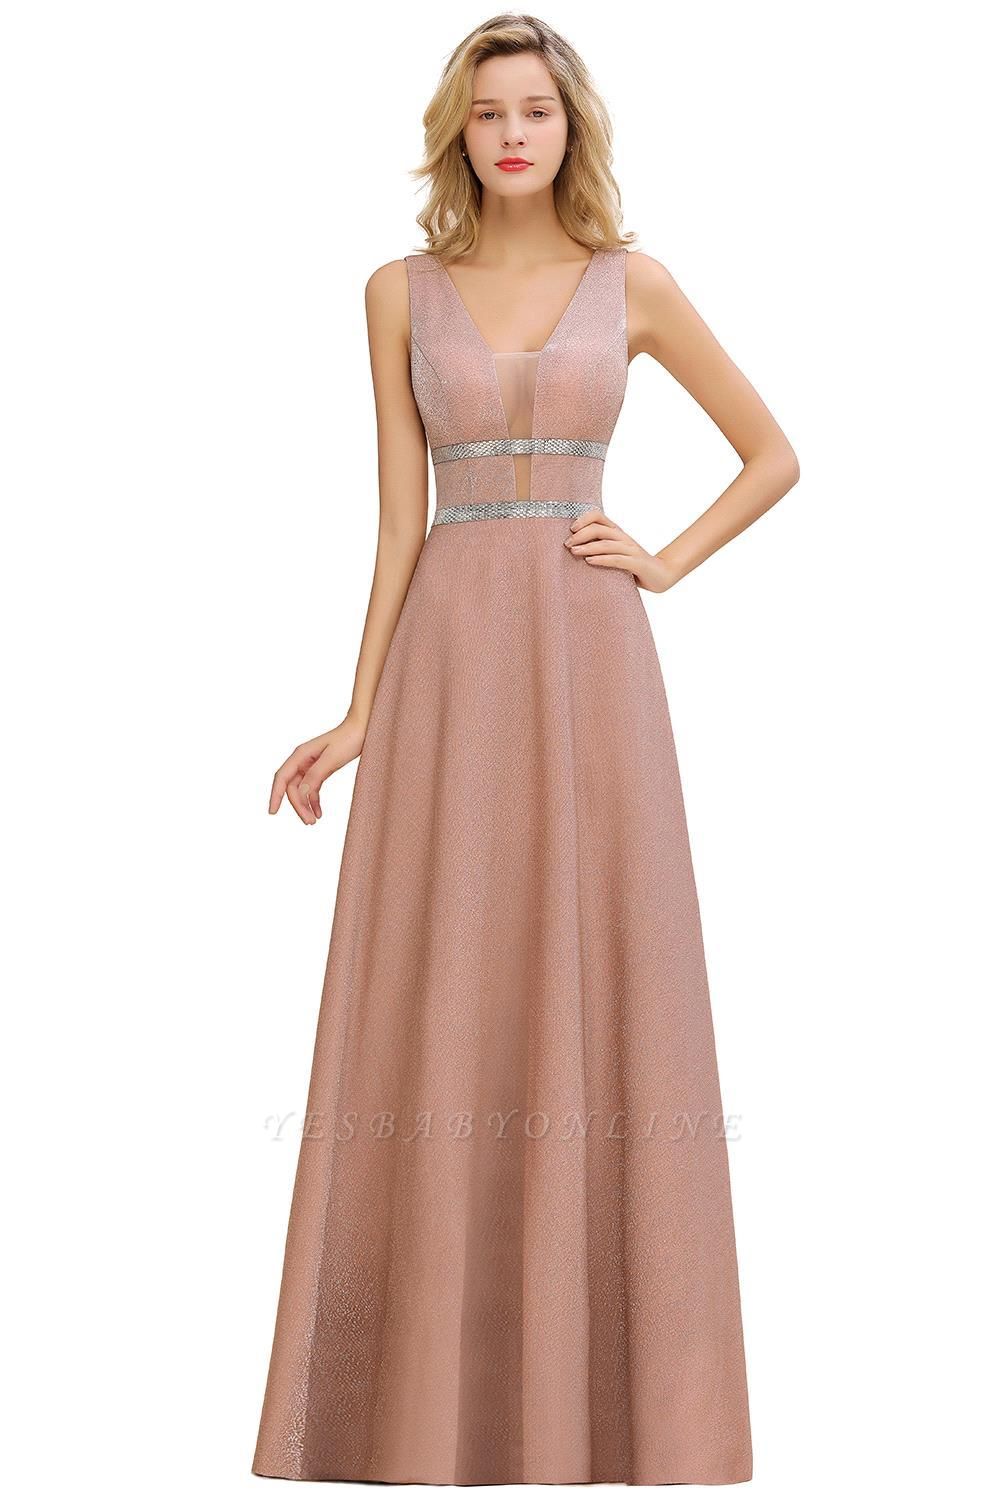 Gorgeous Sleeveless V-back Pink Deep V-neck Long Evening Dresses